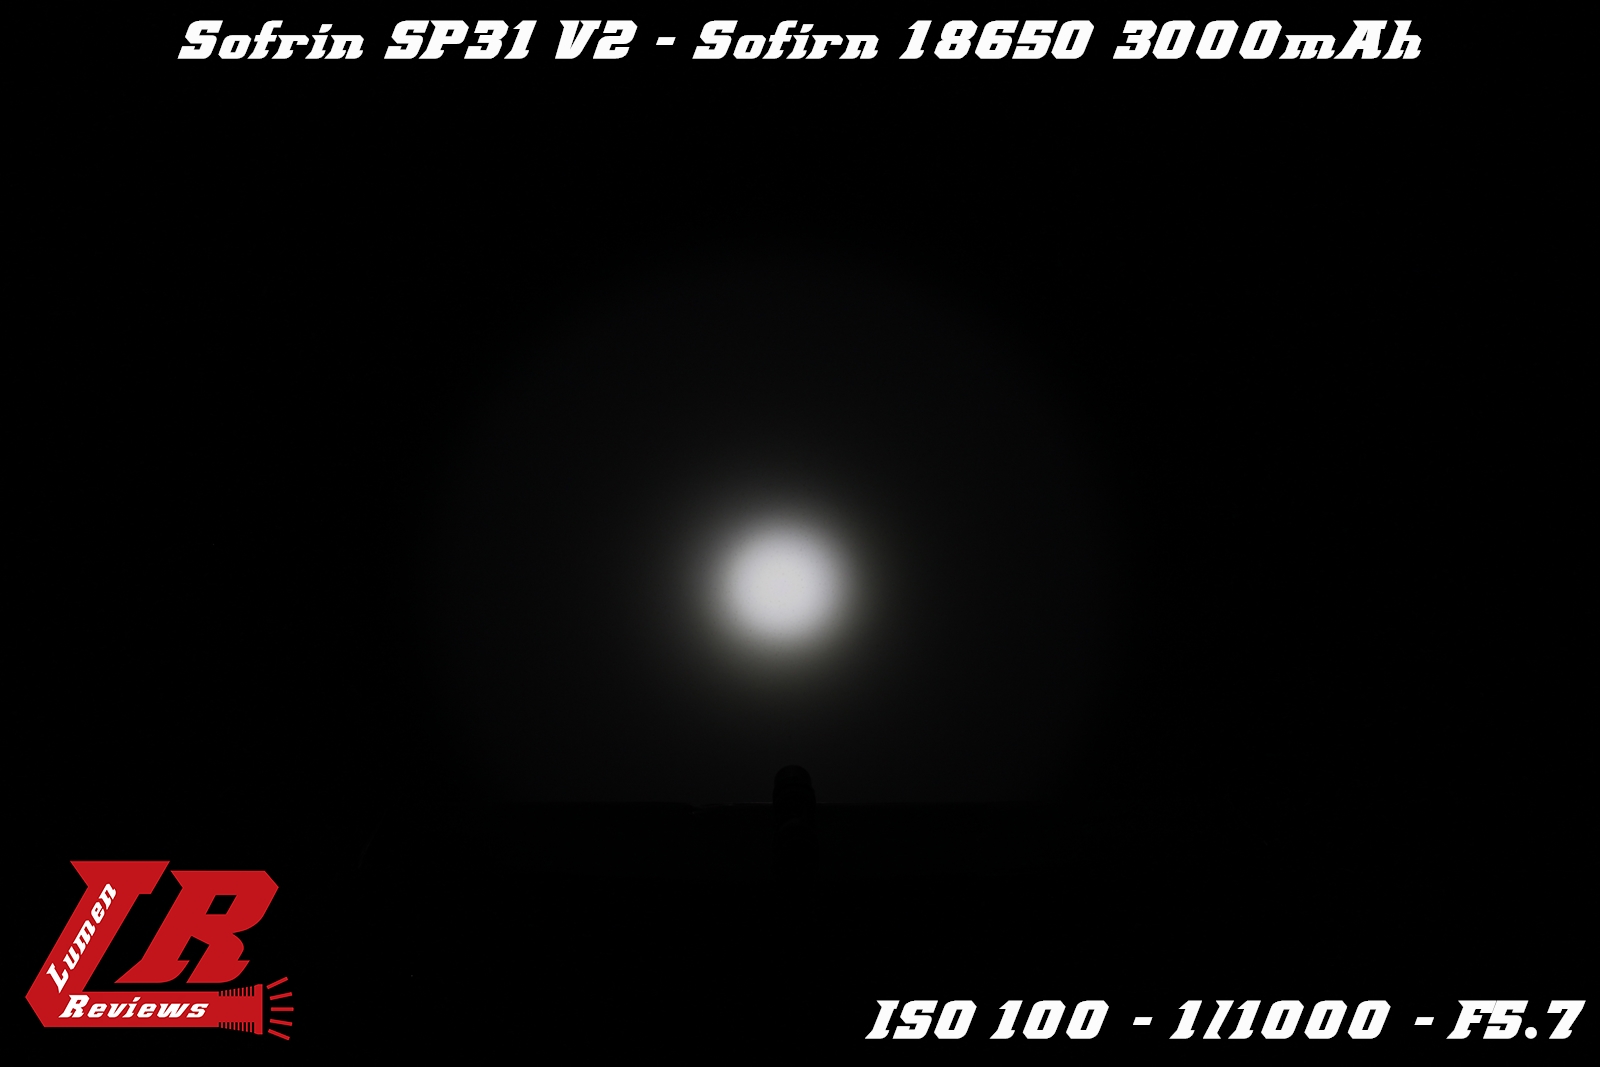 Sofirn_SP31_V2_30.jpg